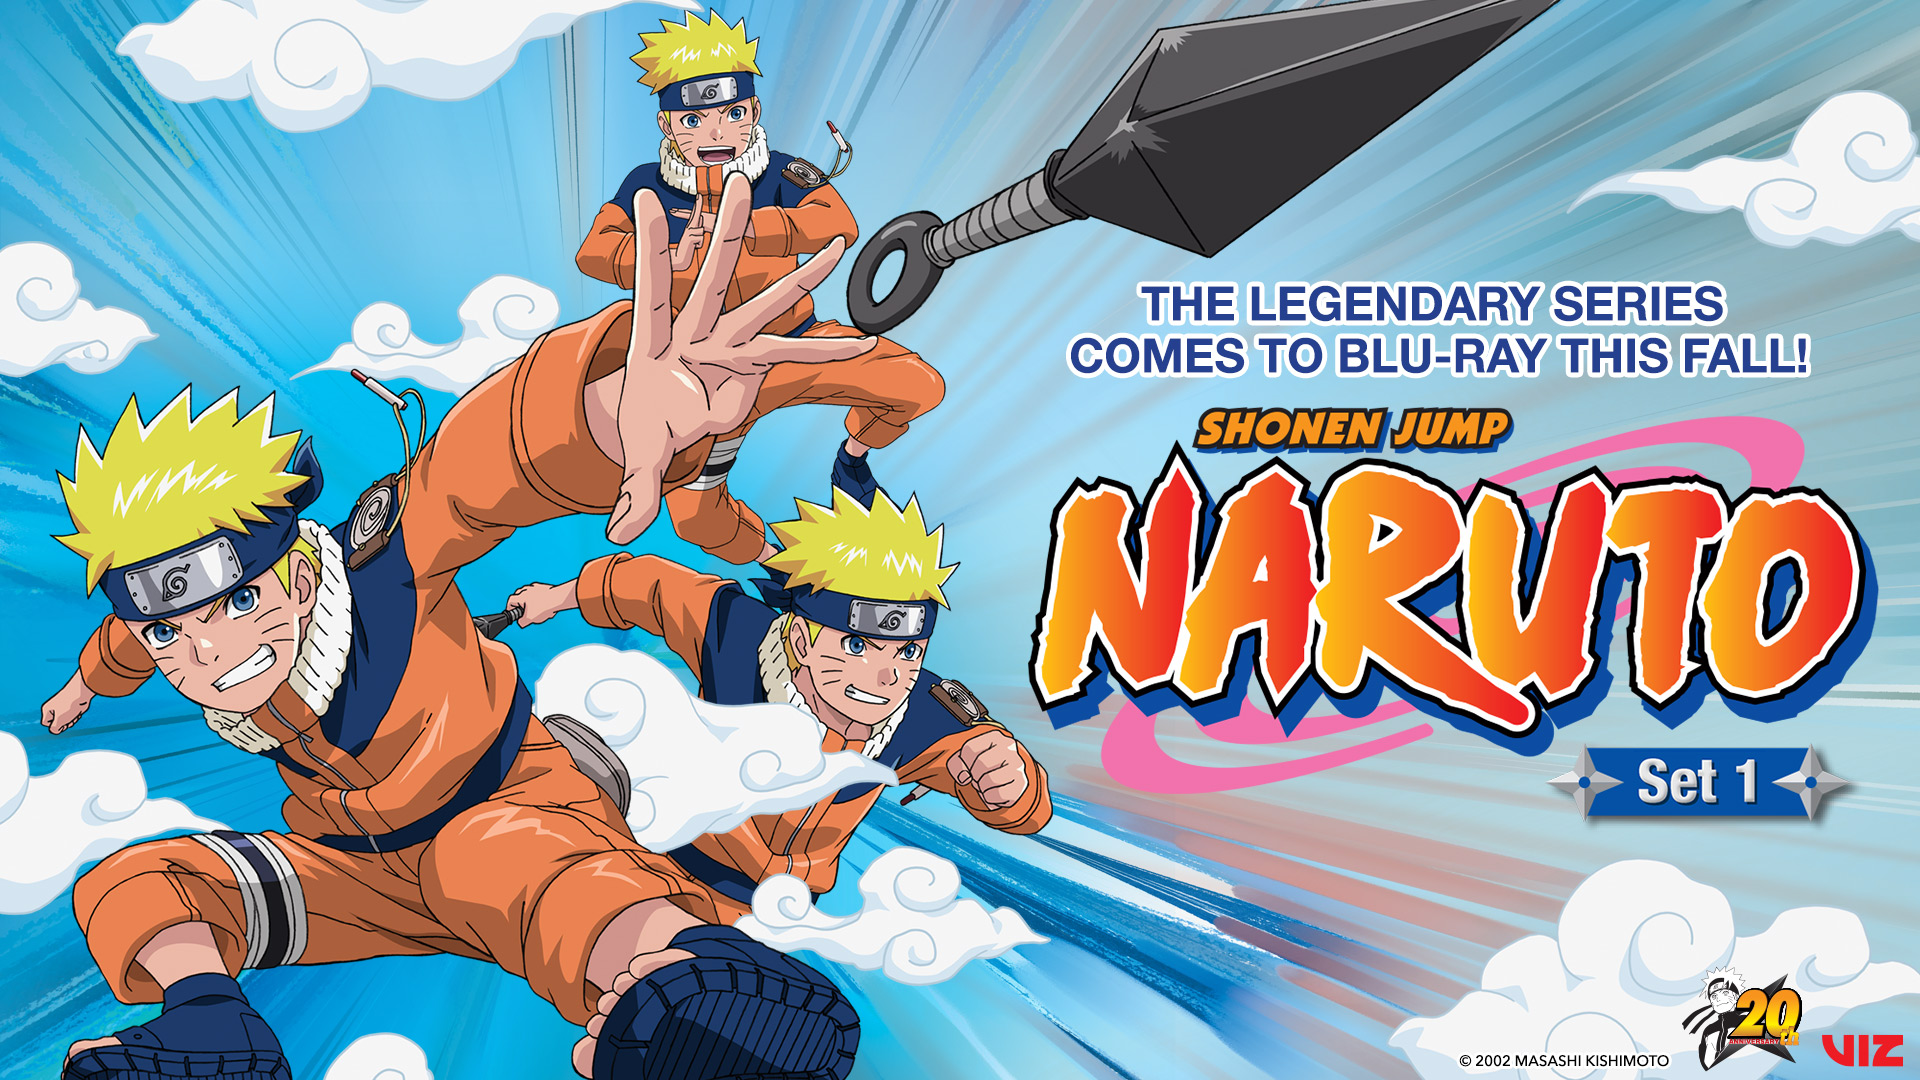 Naruto Anime Finally Brings Its Jutsu to Blu-ray This Fall!